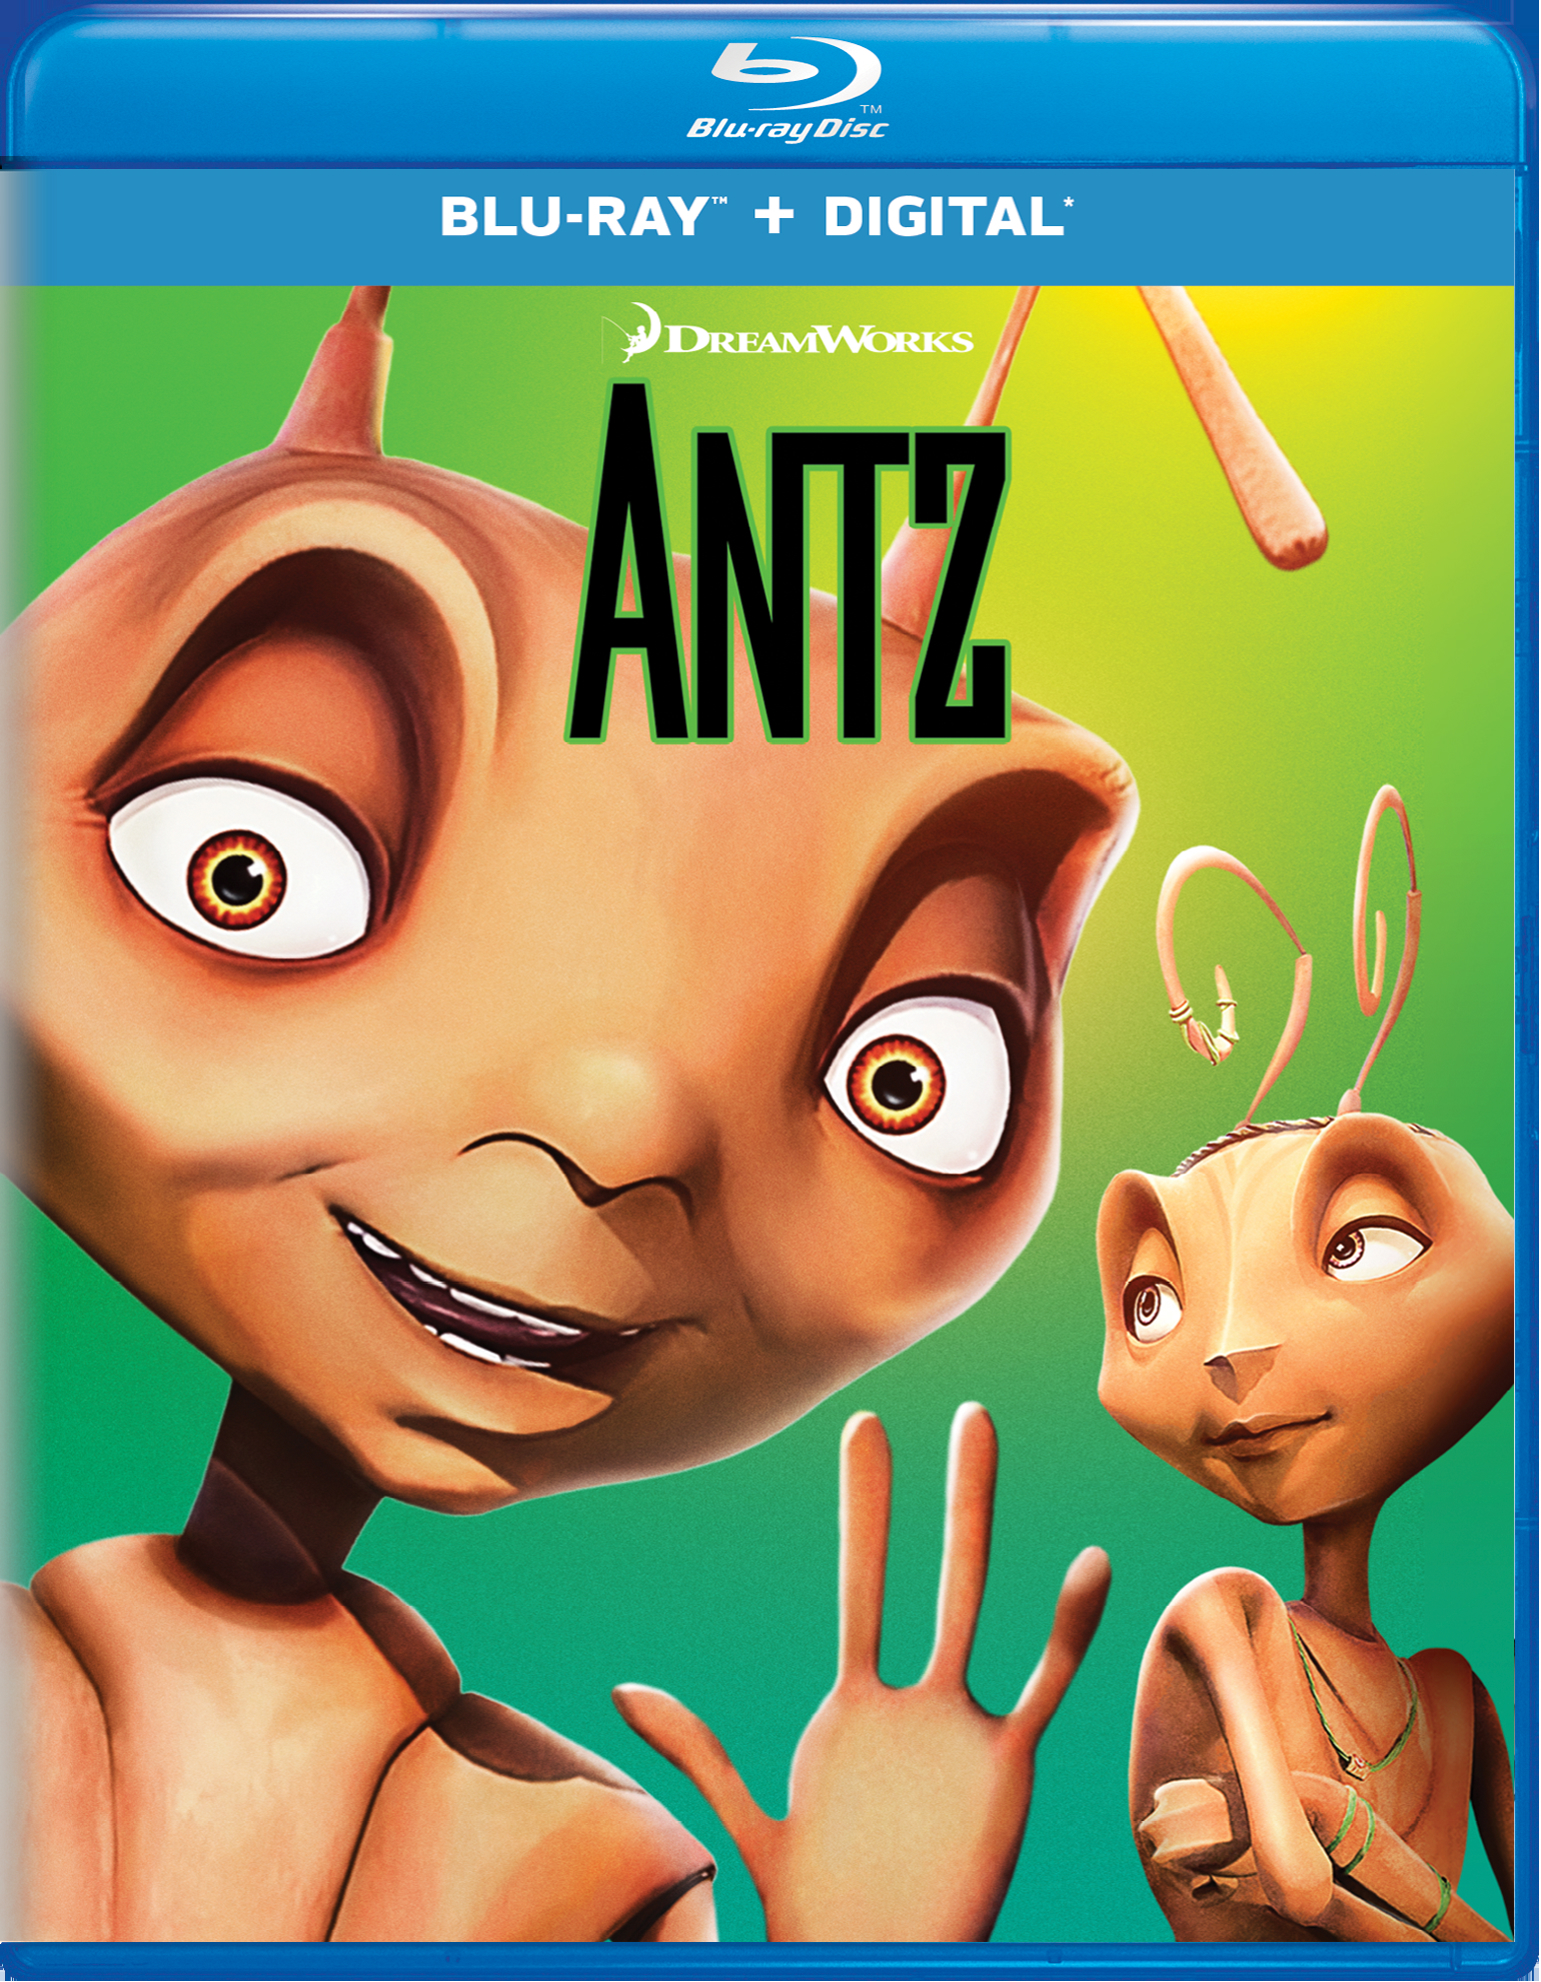 Antz (Blu-ray + Digital HD) - Blu-ray [ 1998 ]  - Children Movies On Blu-ray - Movies On GRUV